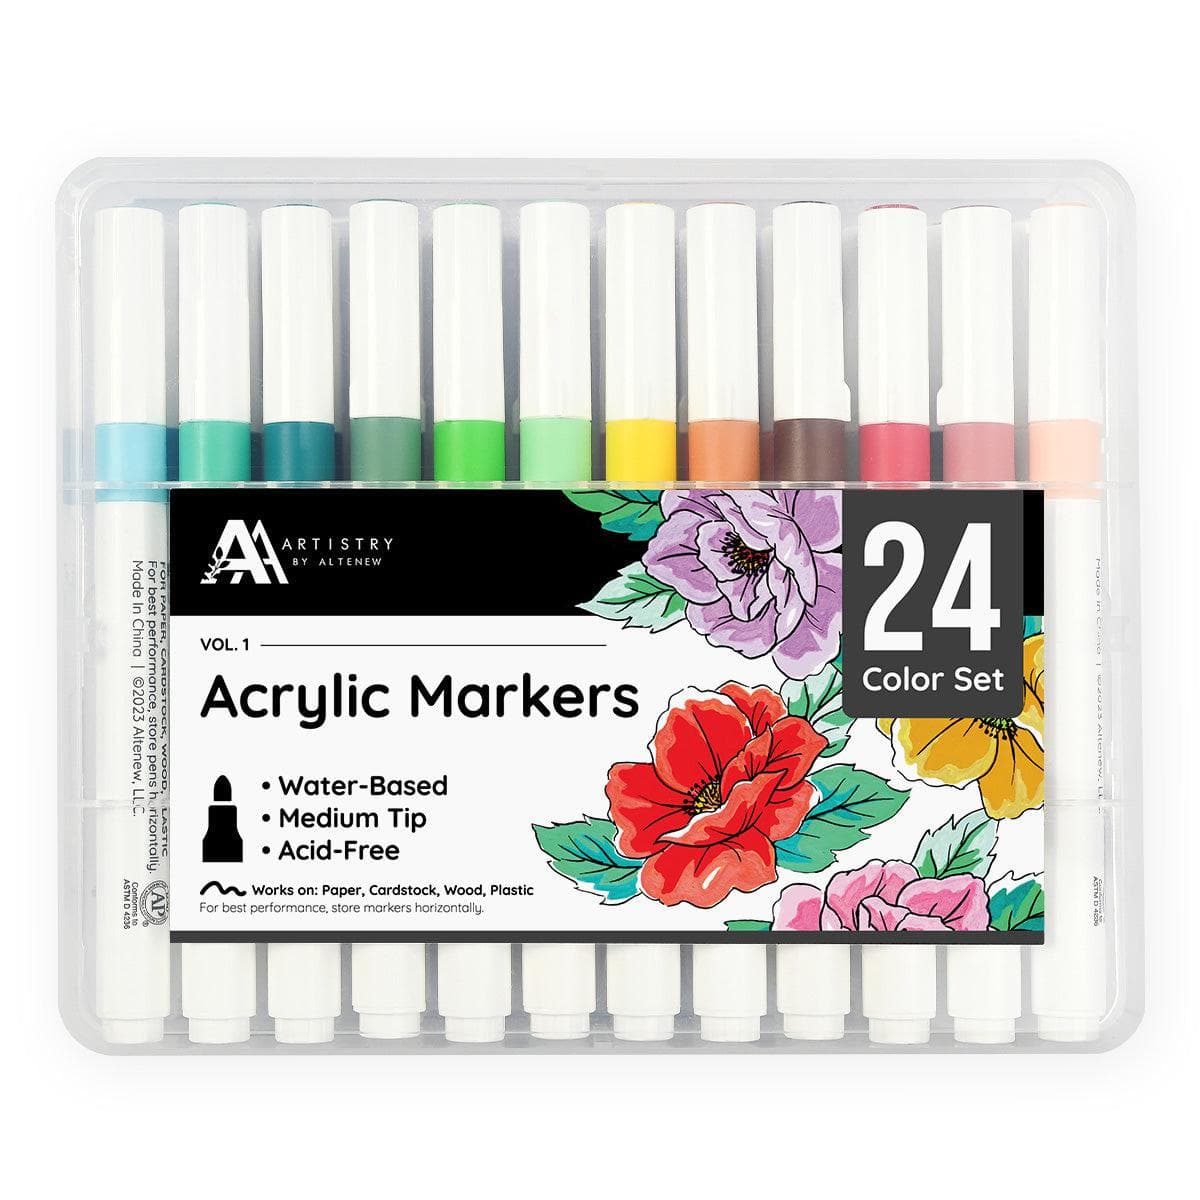 Acrylic Marker 24 Color Set Vol. 1